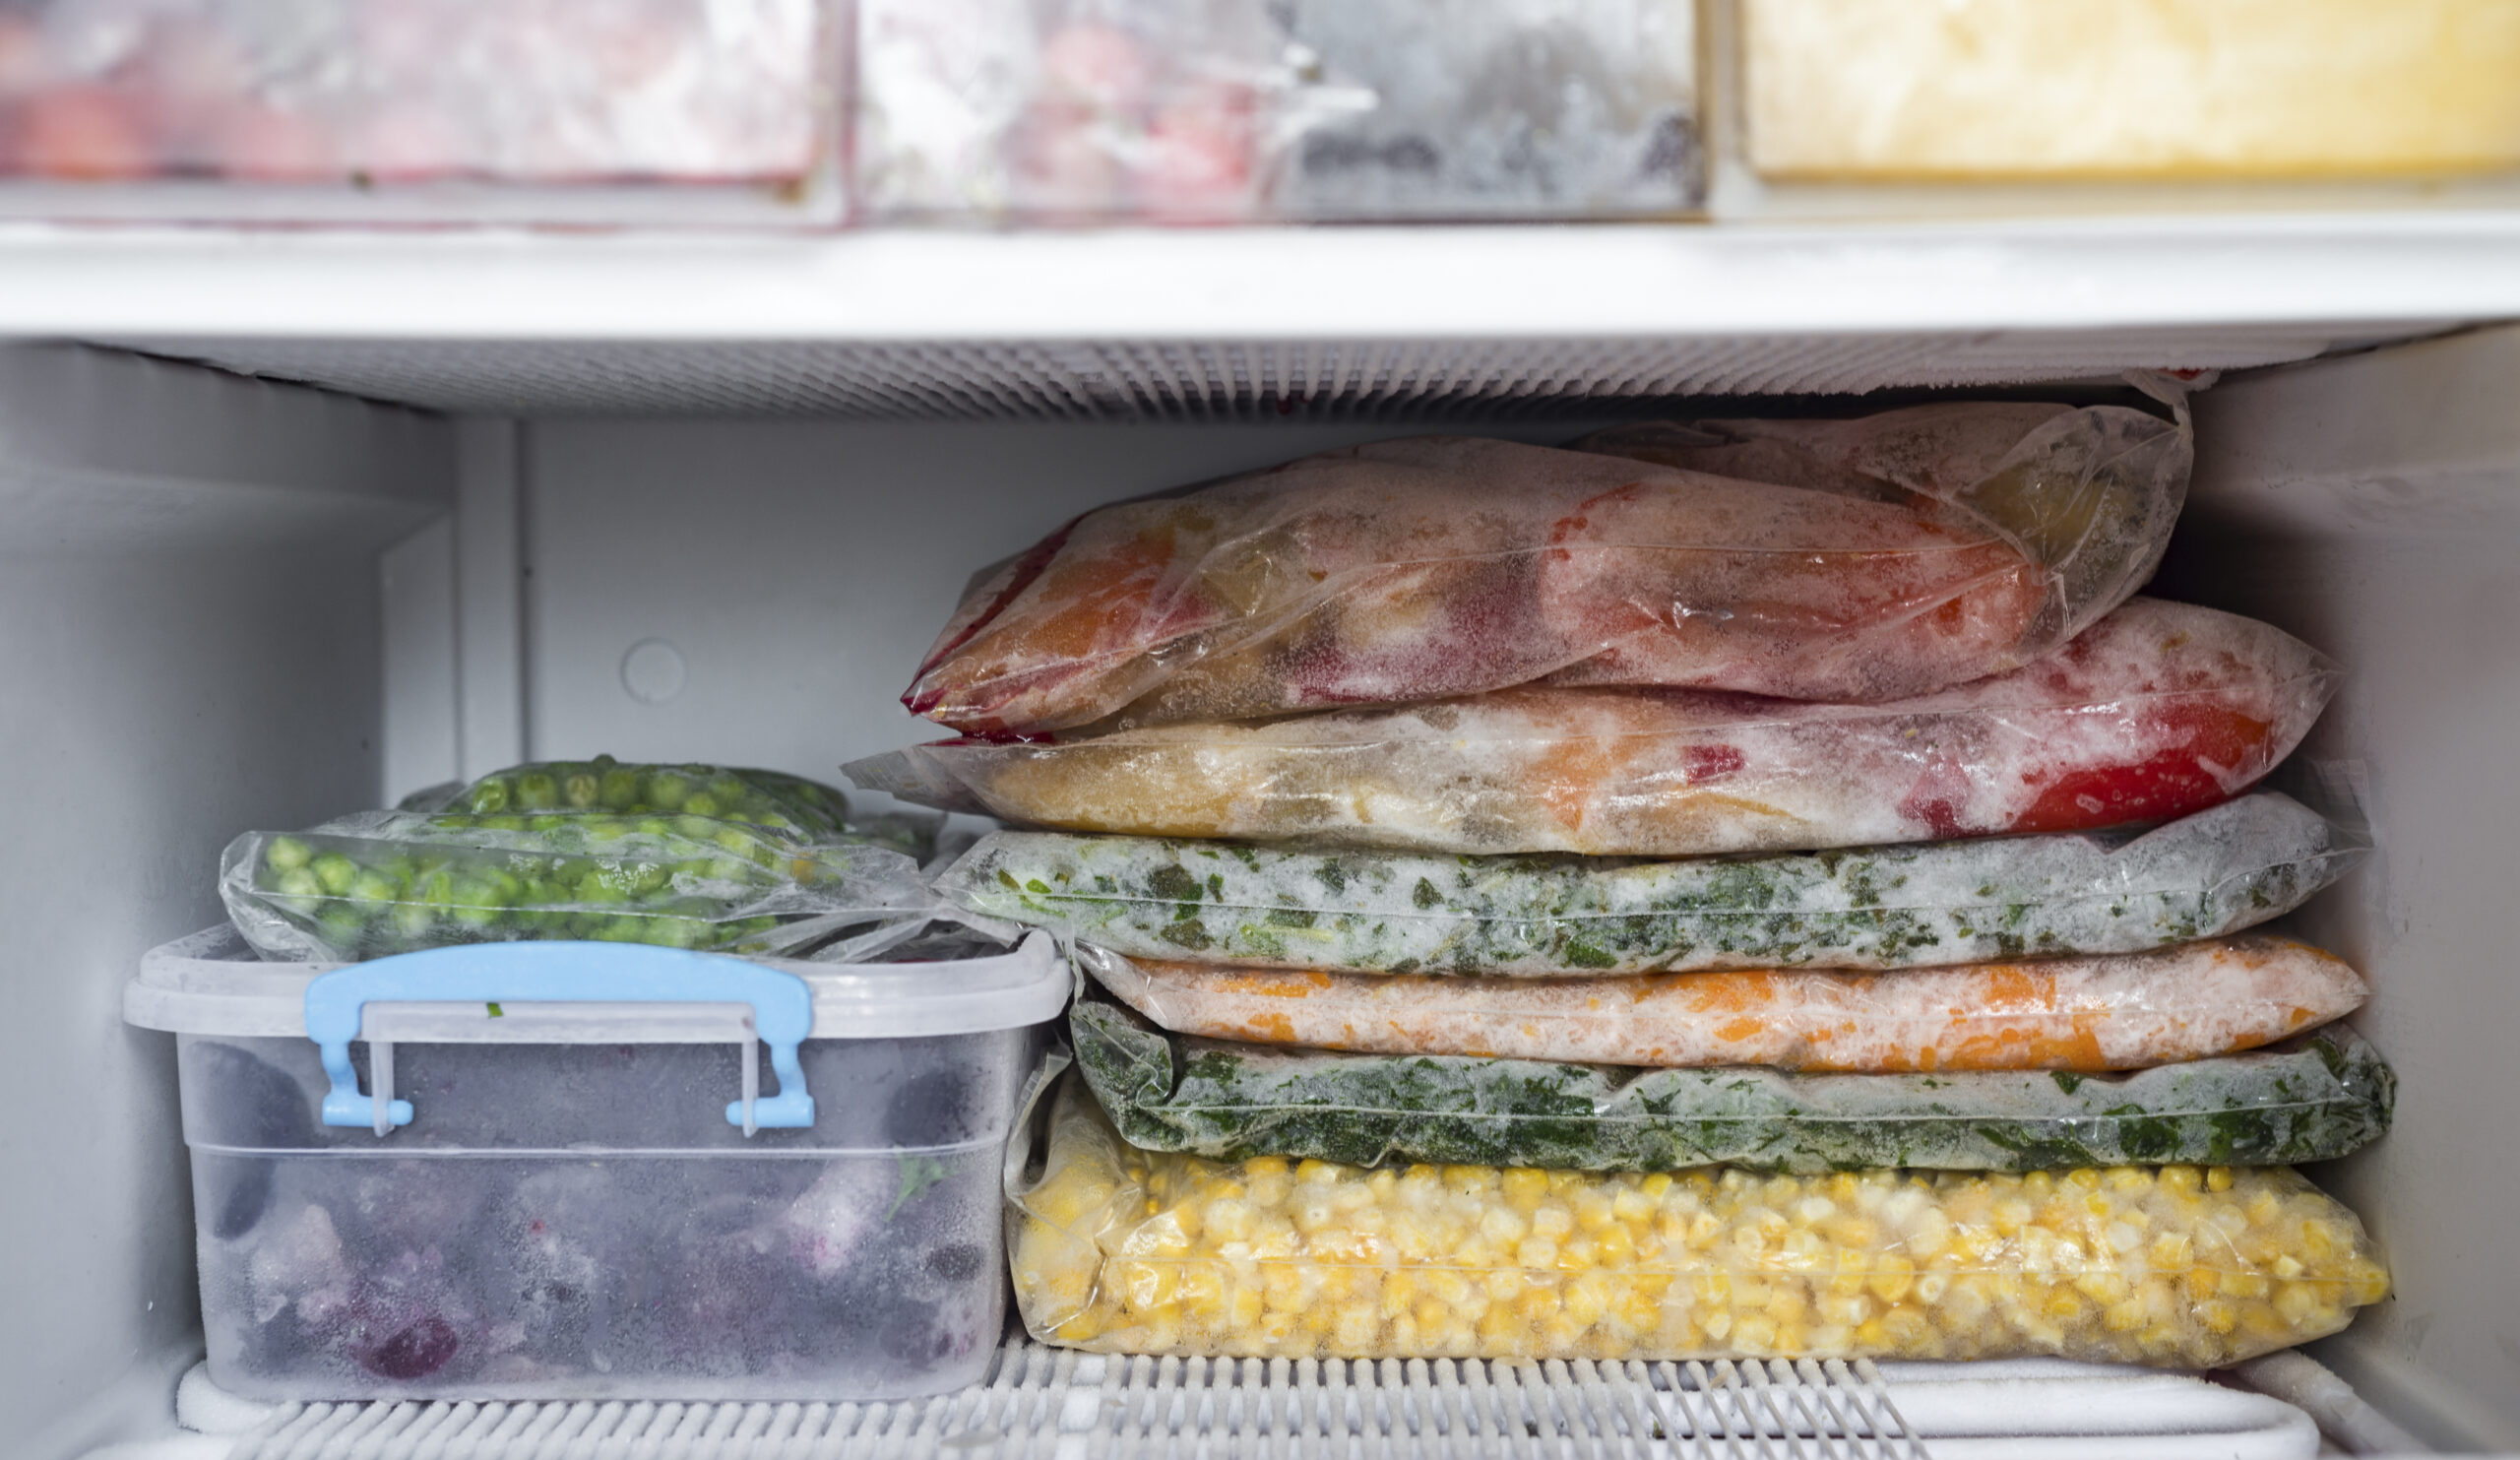 freezer with frozen food